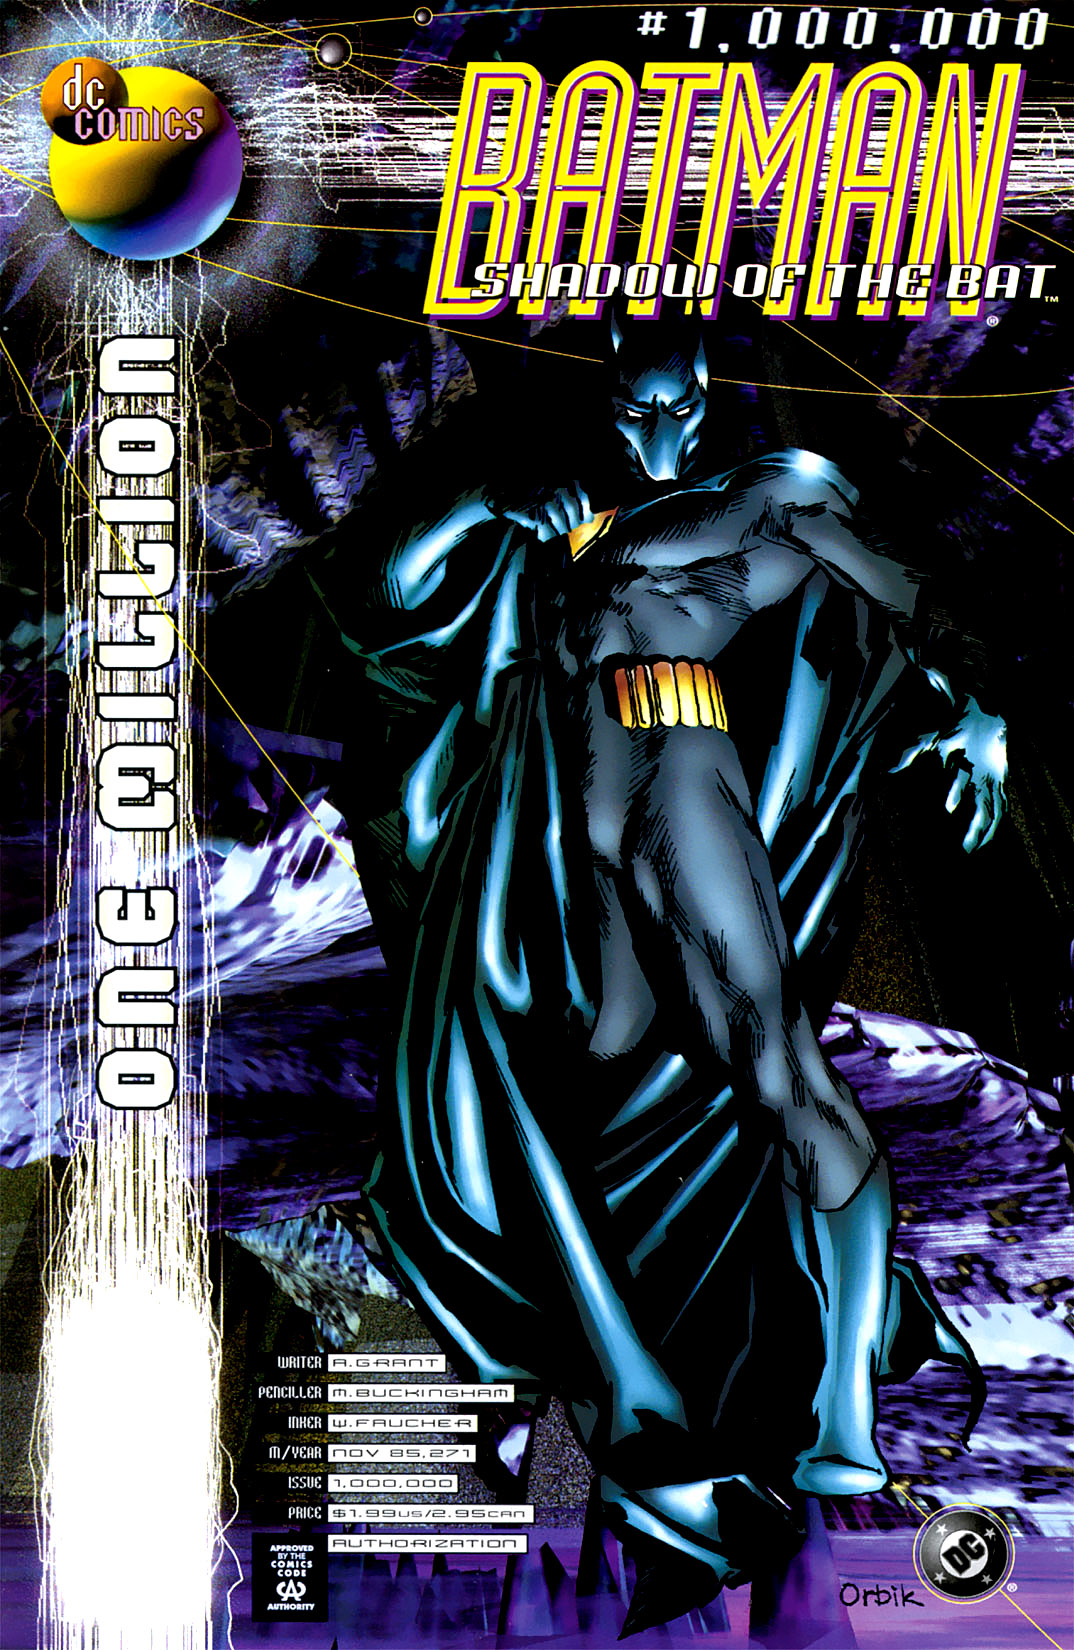 Read online Batman: Shadow of the Bat comic -  Issue #1000000 - 1